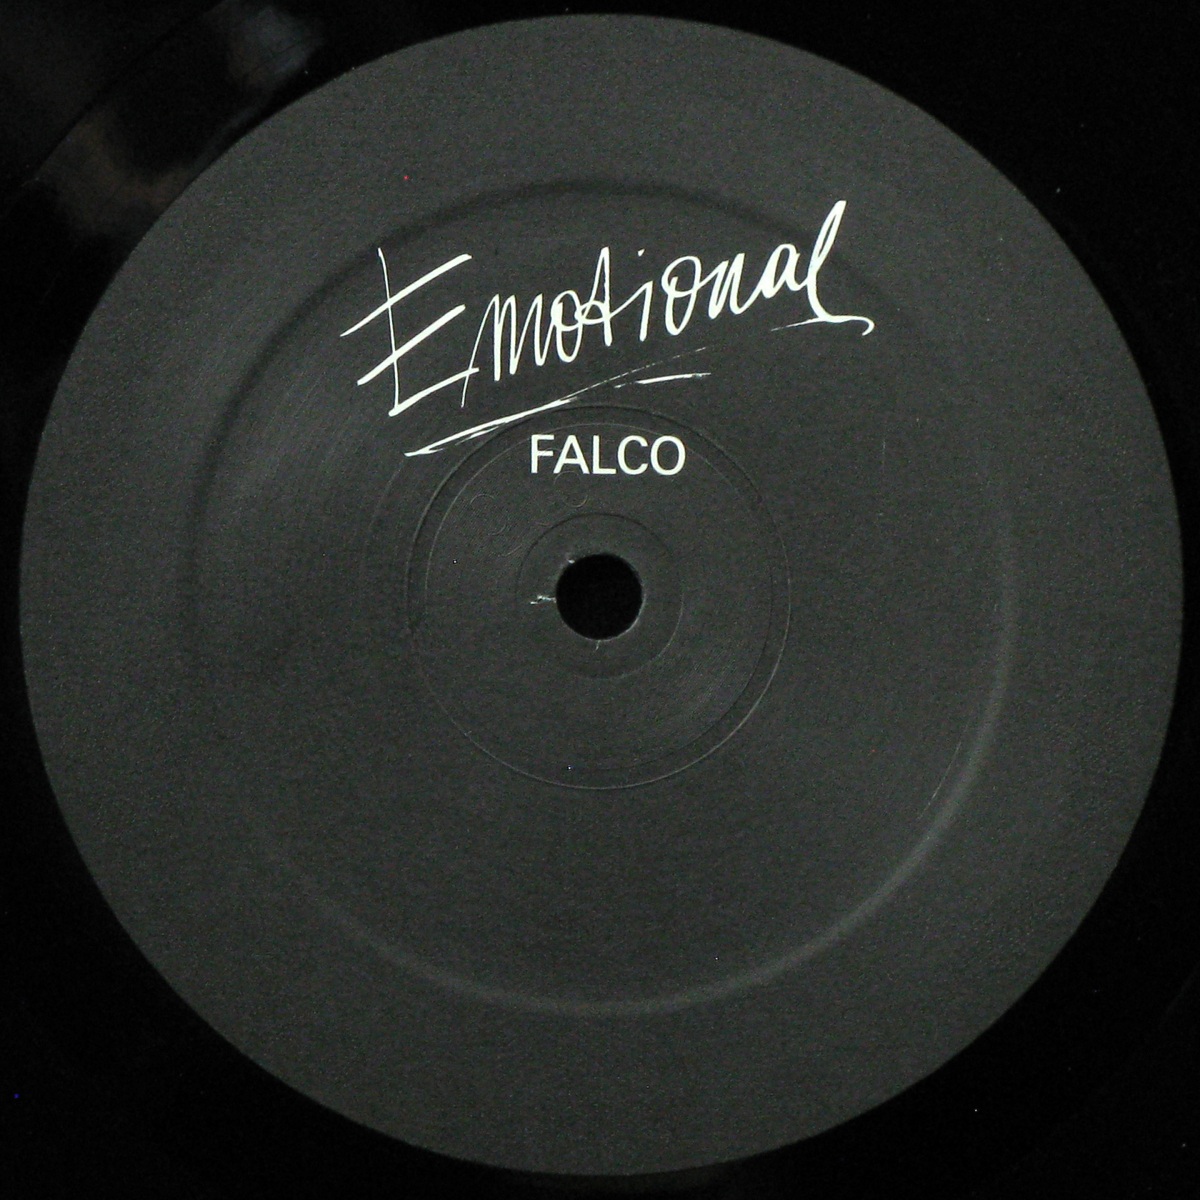 LP Falco — Emotional фото 2